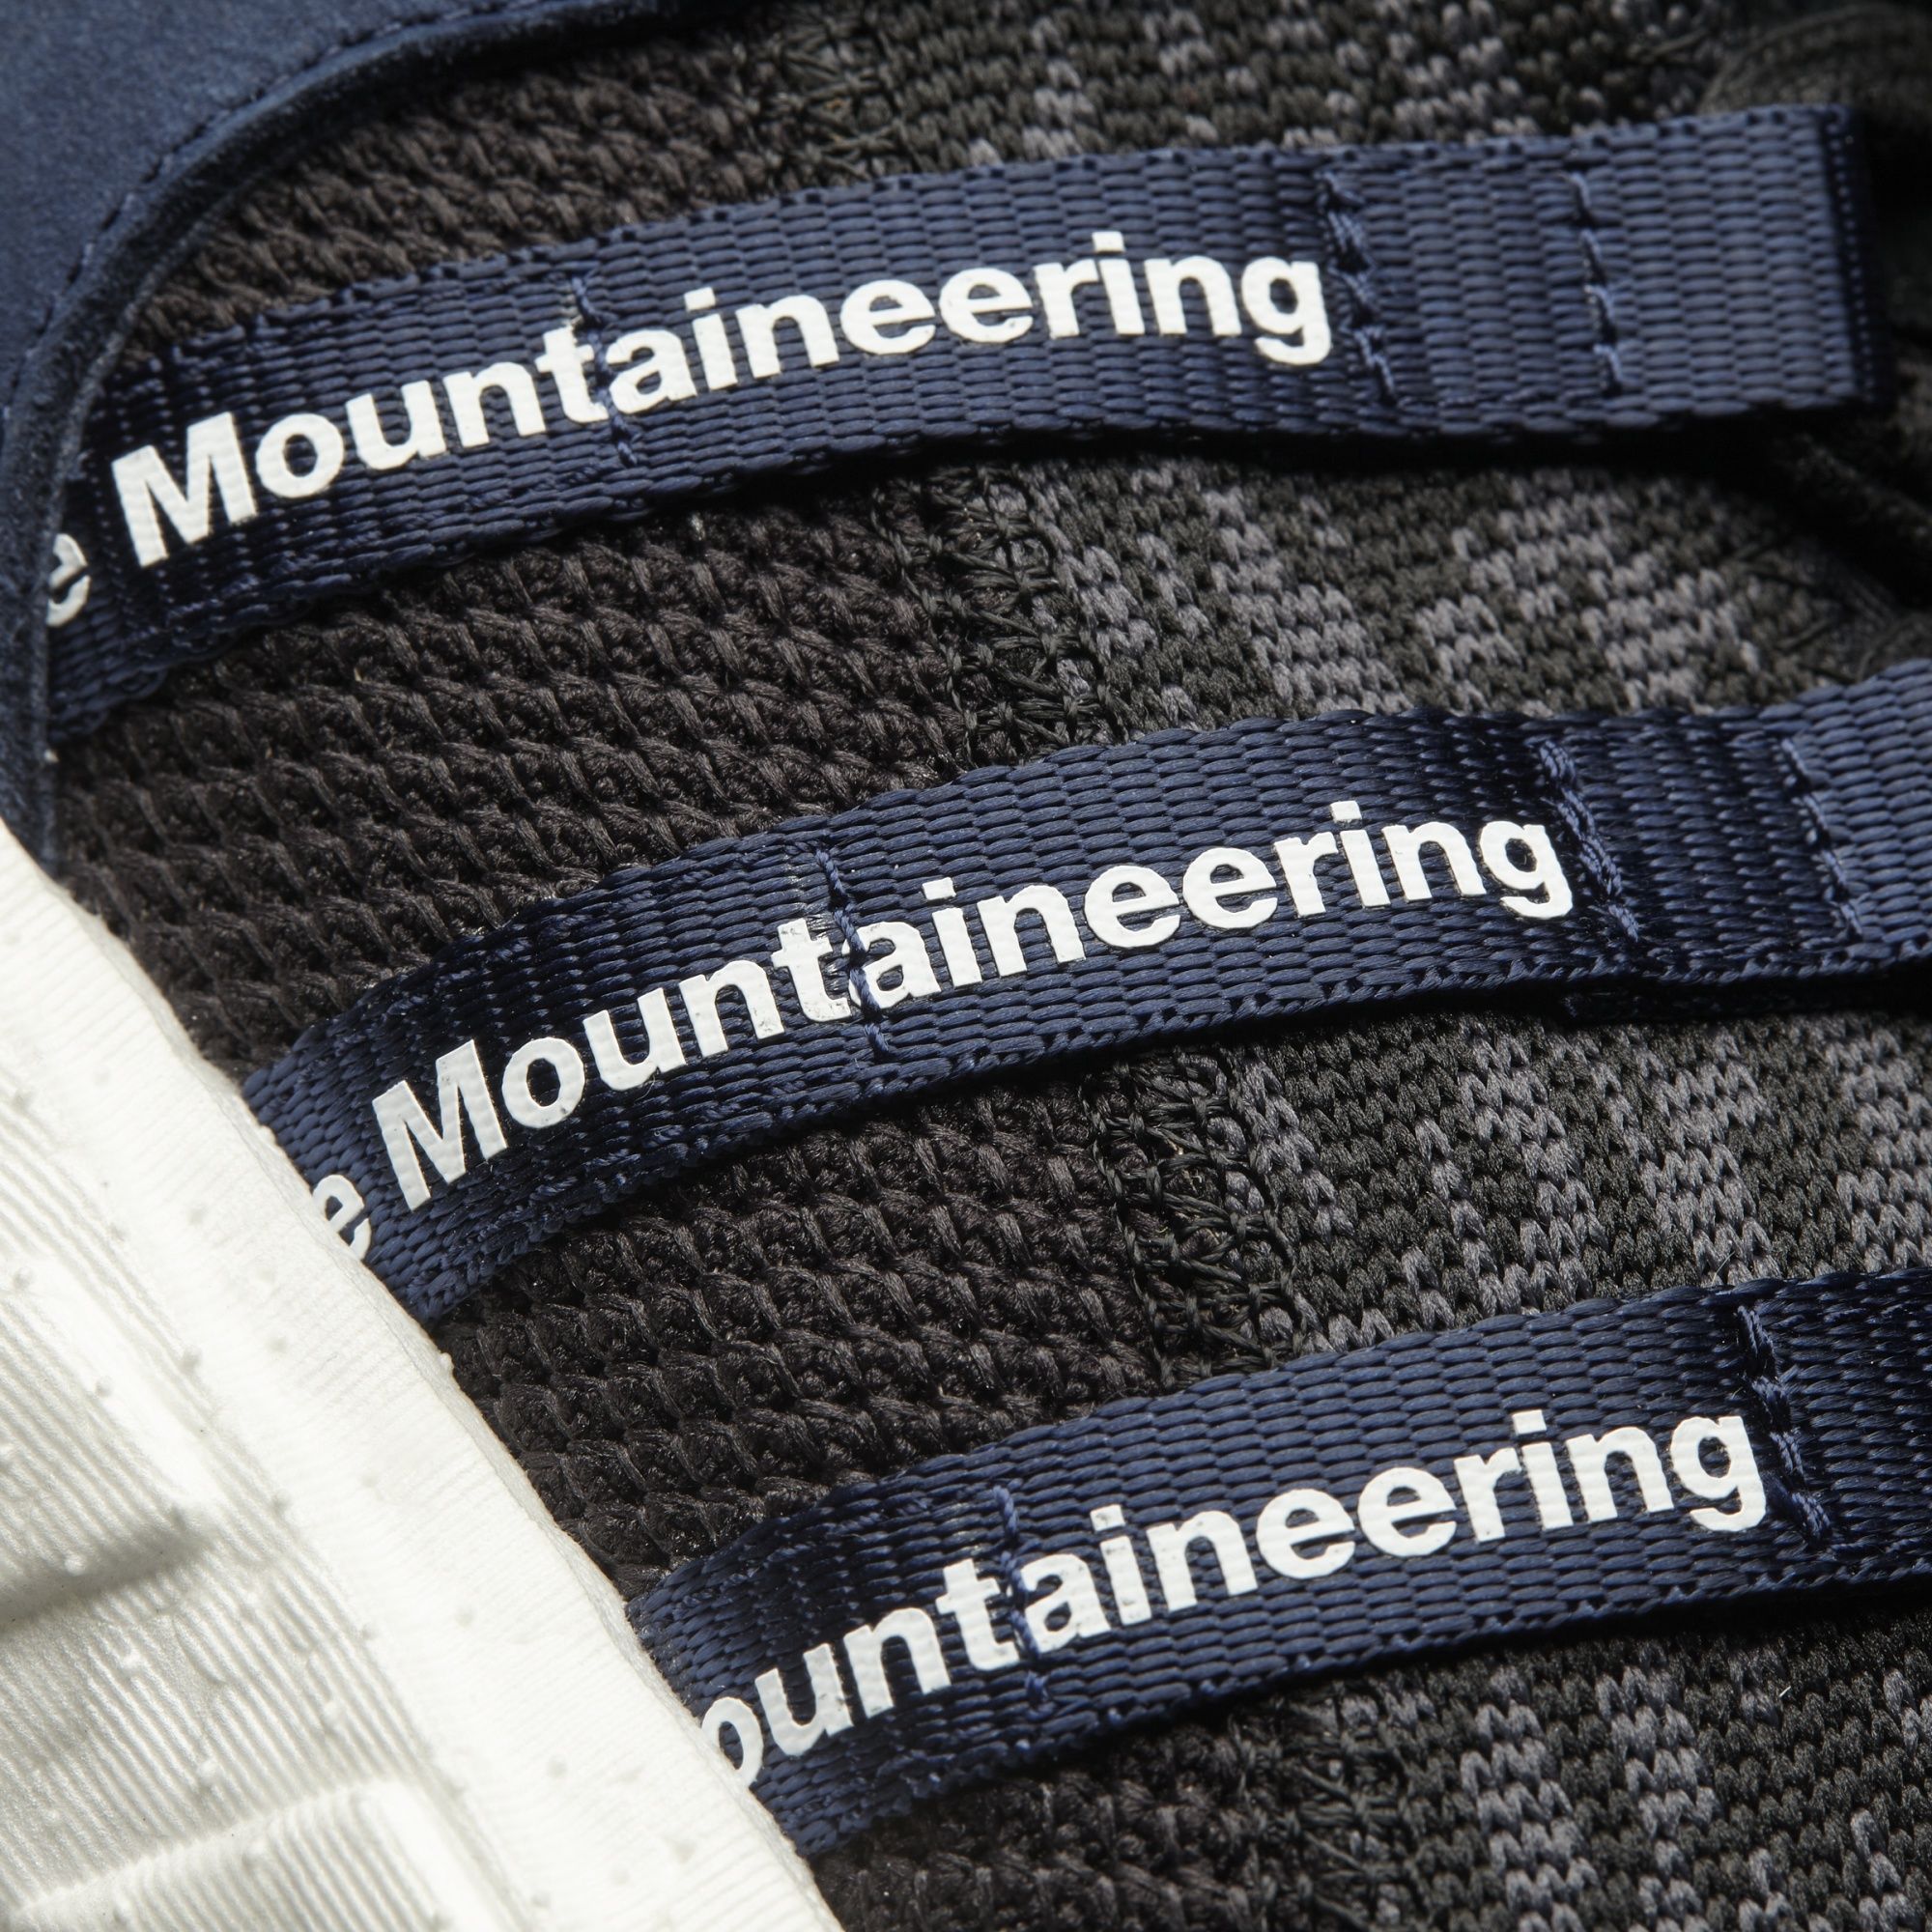 Adidas x White Mountaineering
EQT Support Future
Navy / Black / White